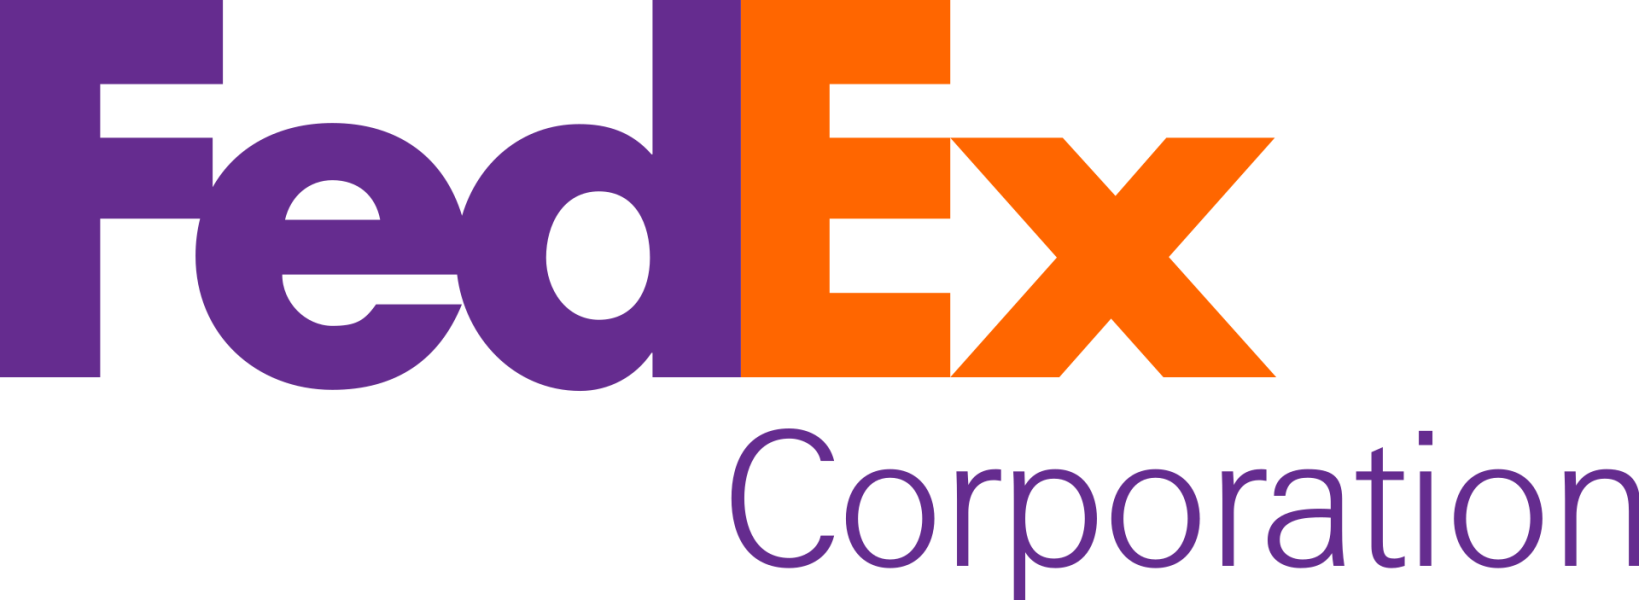 1920px-FedEx_Corporation_-_2016_Logo.svg.png